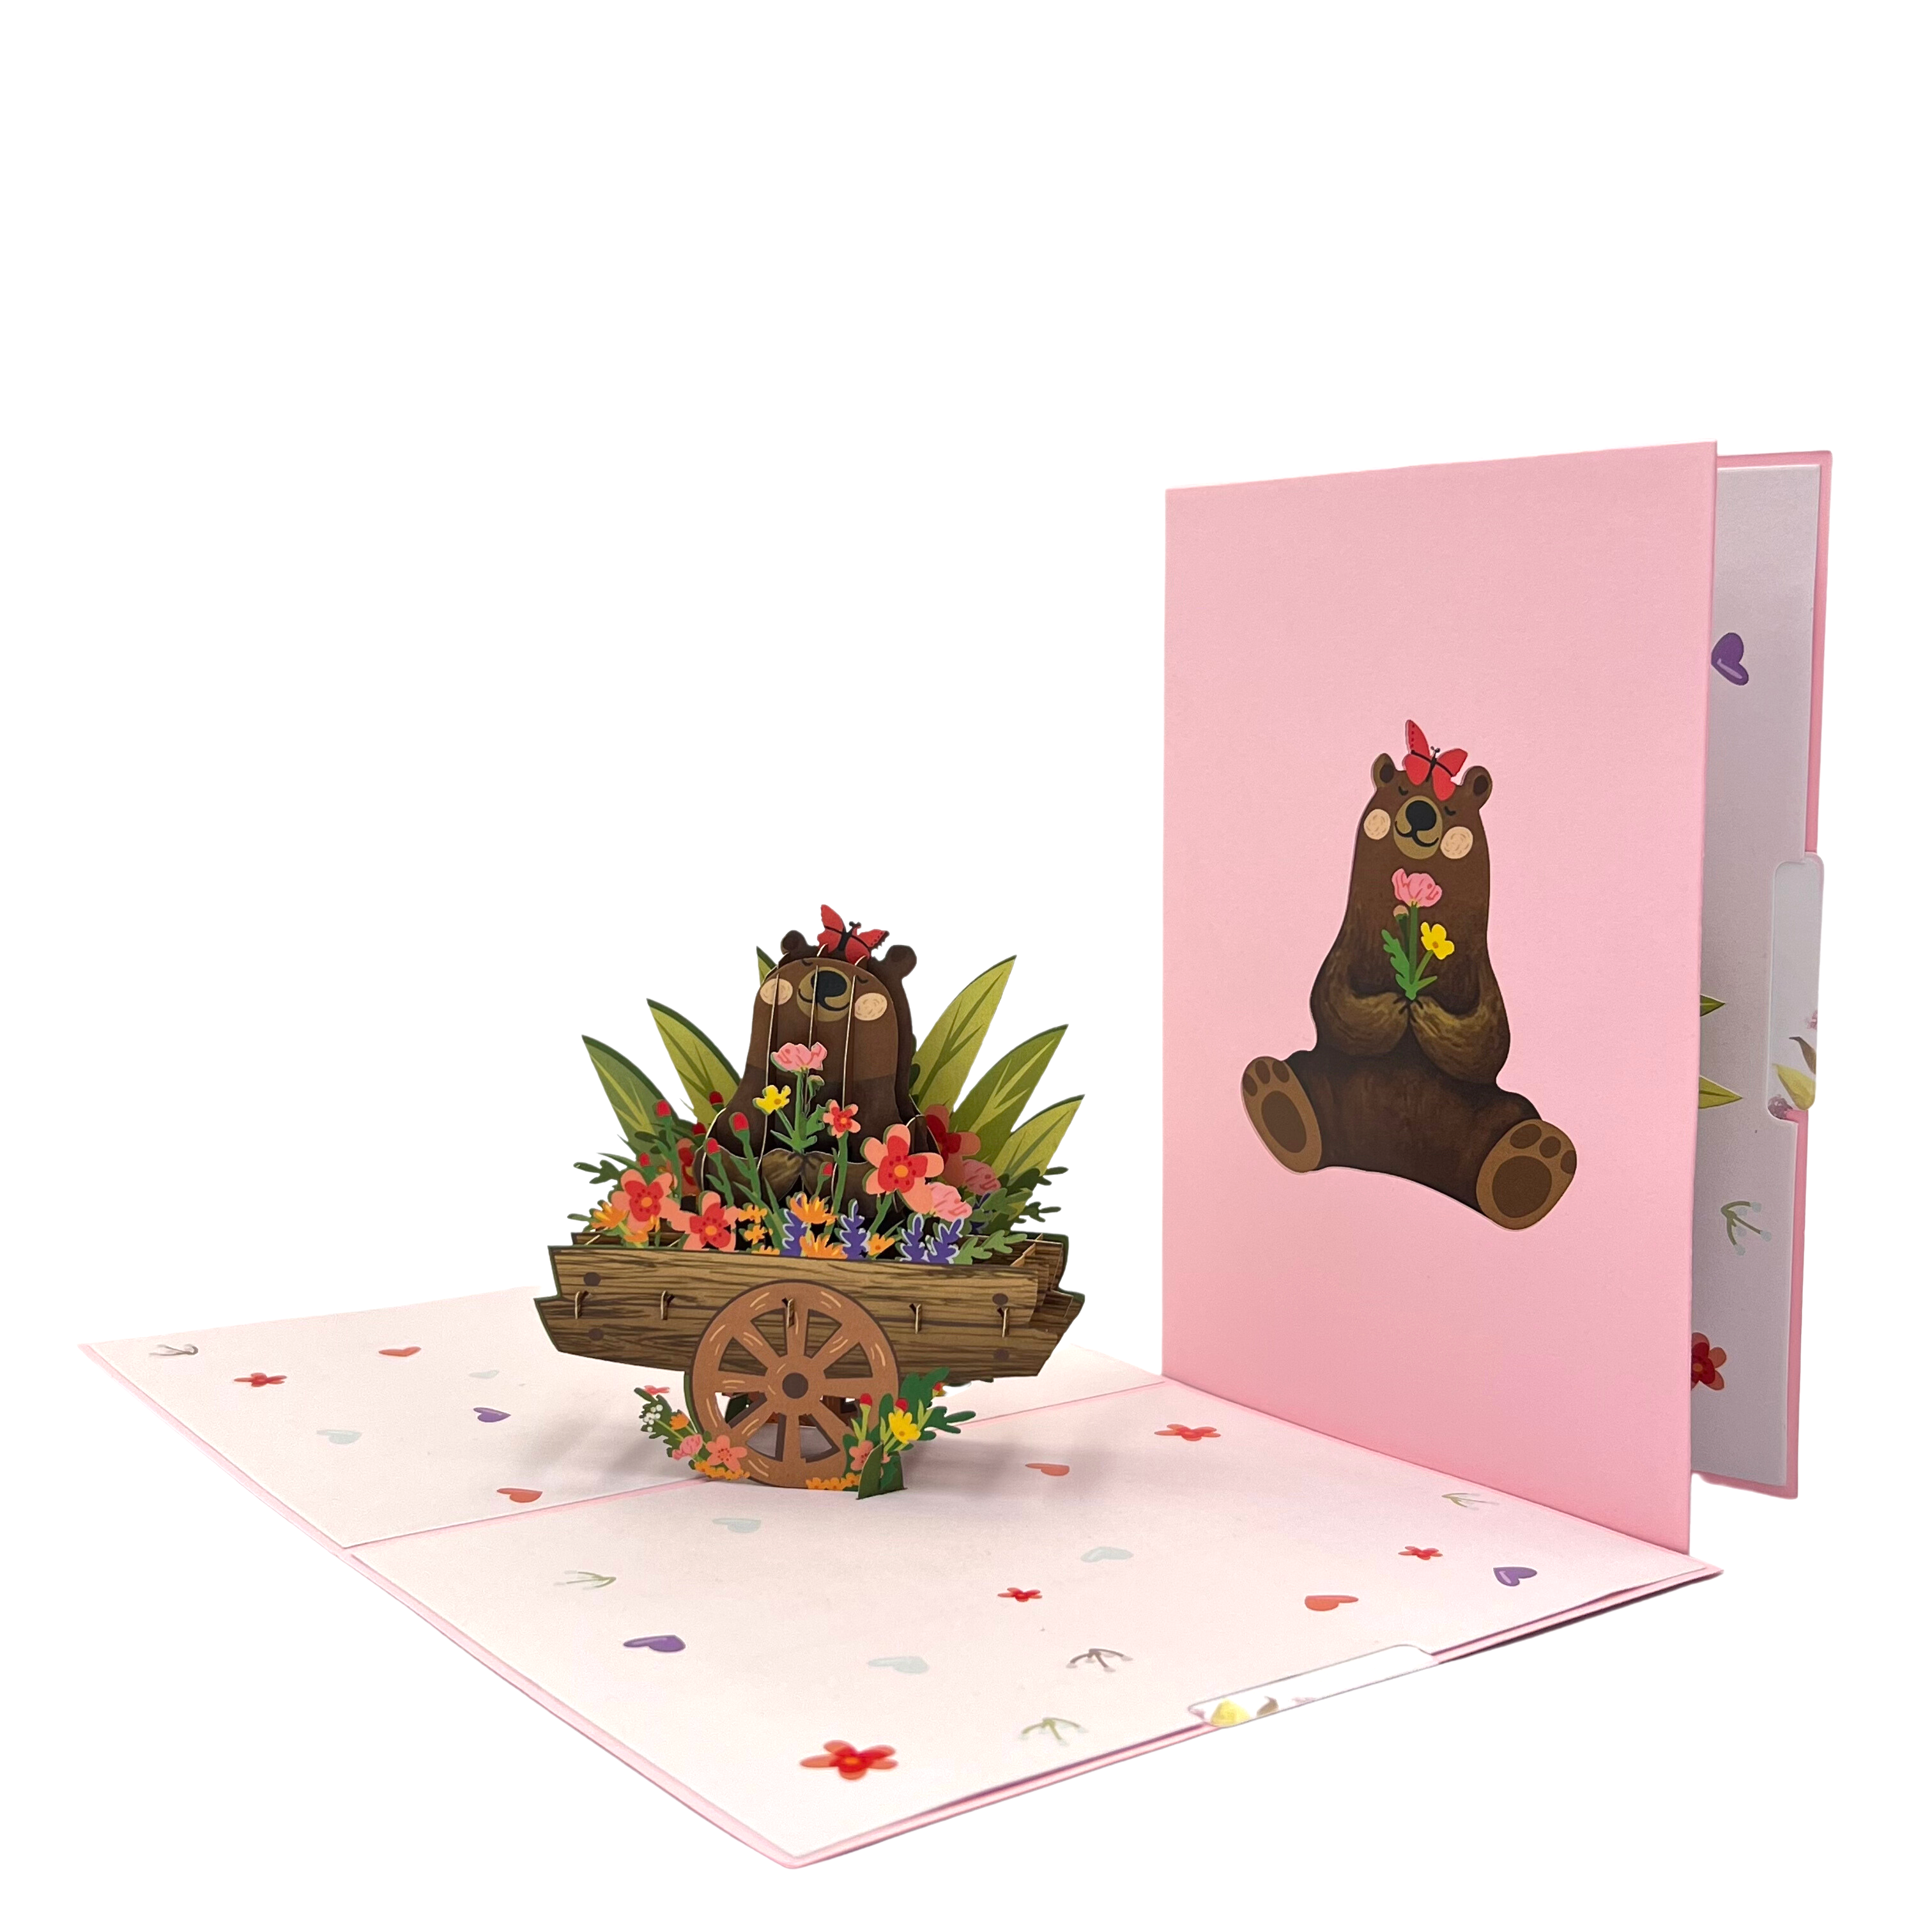 Pop Up Greeting Card Joyful Bear in Flower Gift Wooden Cart Nature Card Cartoon Card Birthday Thank You Gift Teddy Animal Botanic Garden